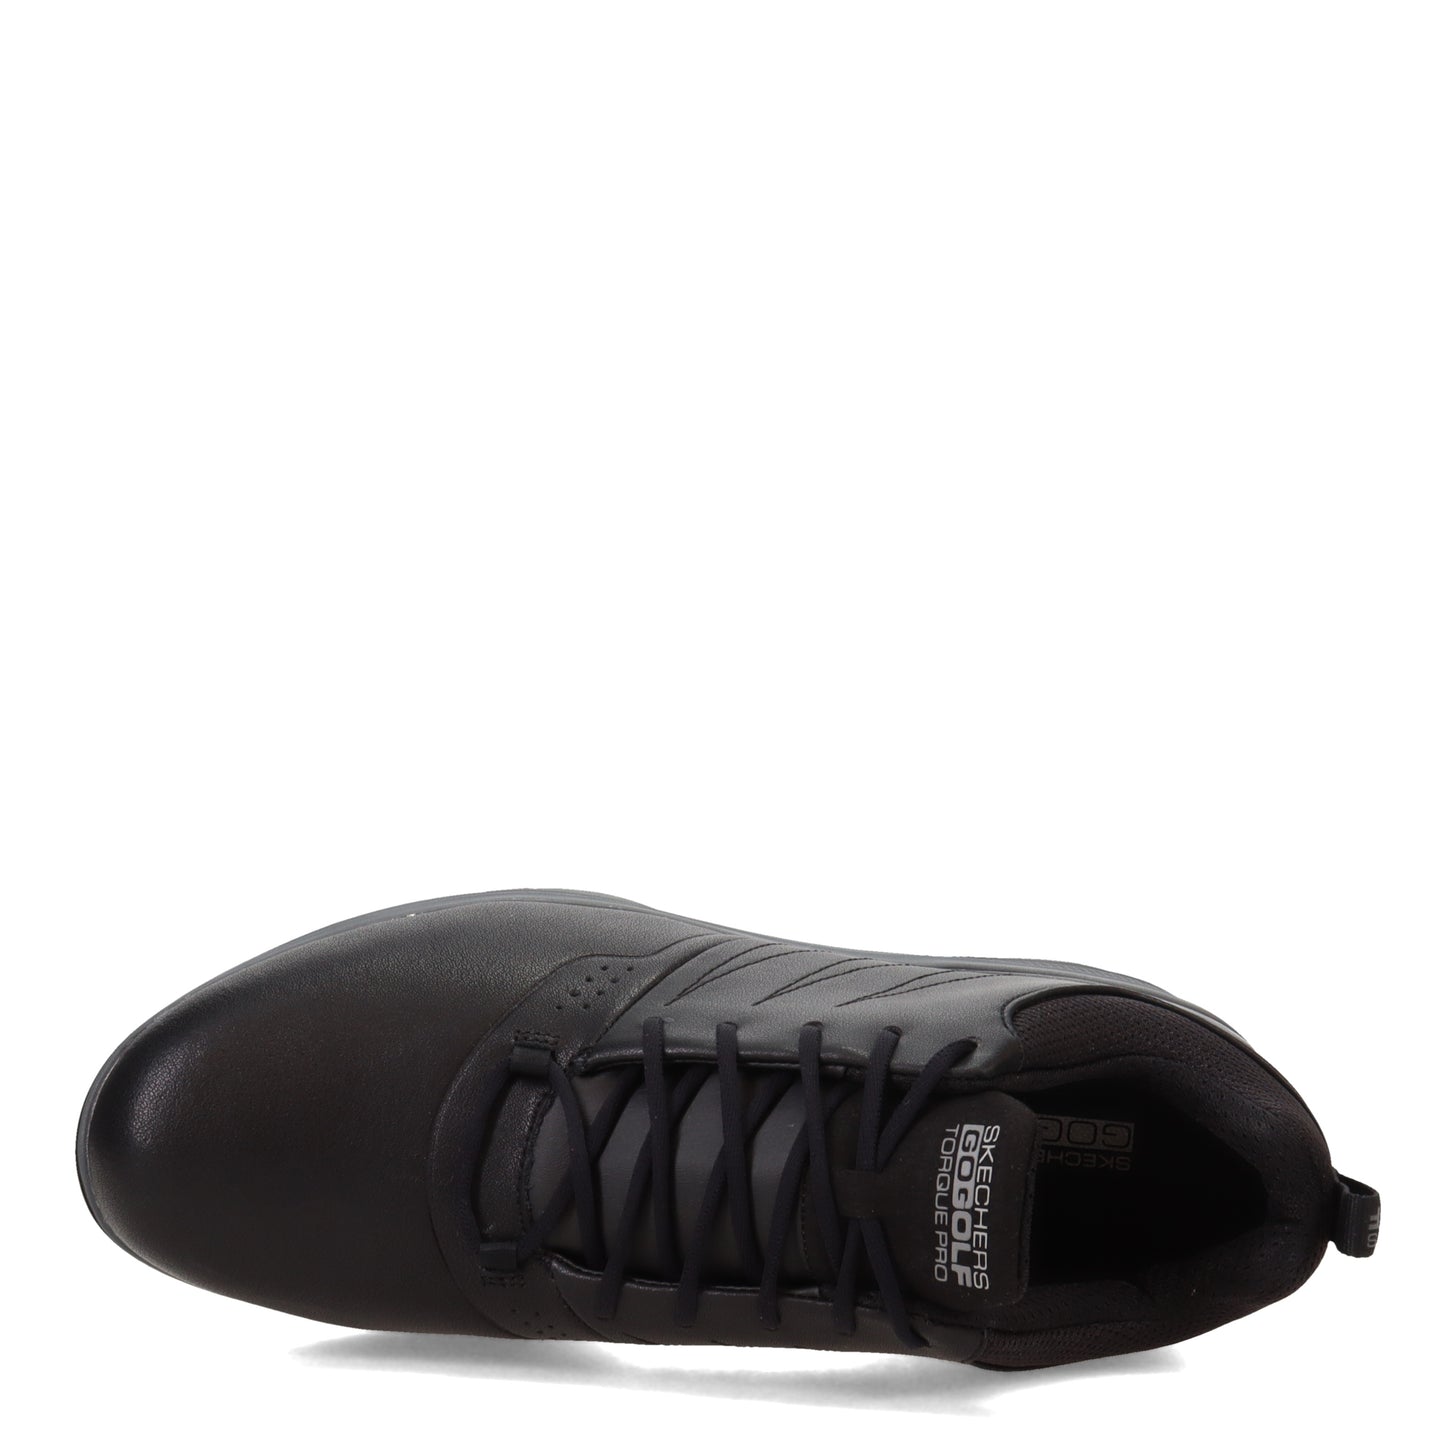 Peltz Shoes  Men's Skechers GOgolf: Torque Pro Golf Shoe Black/Grey 214002-BKGY